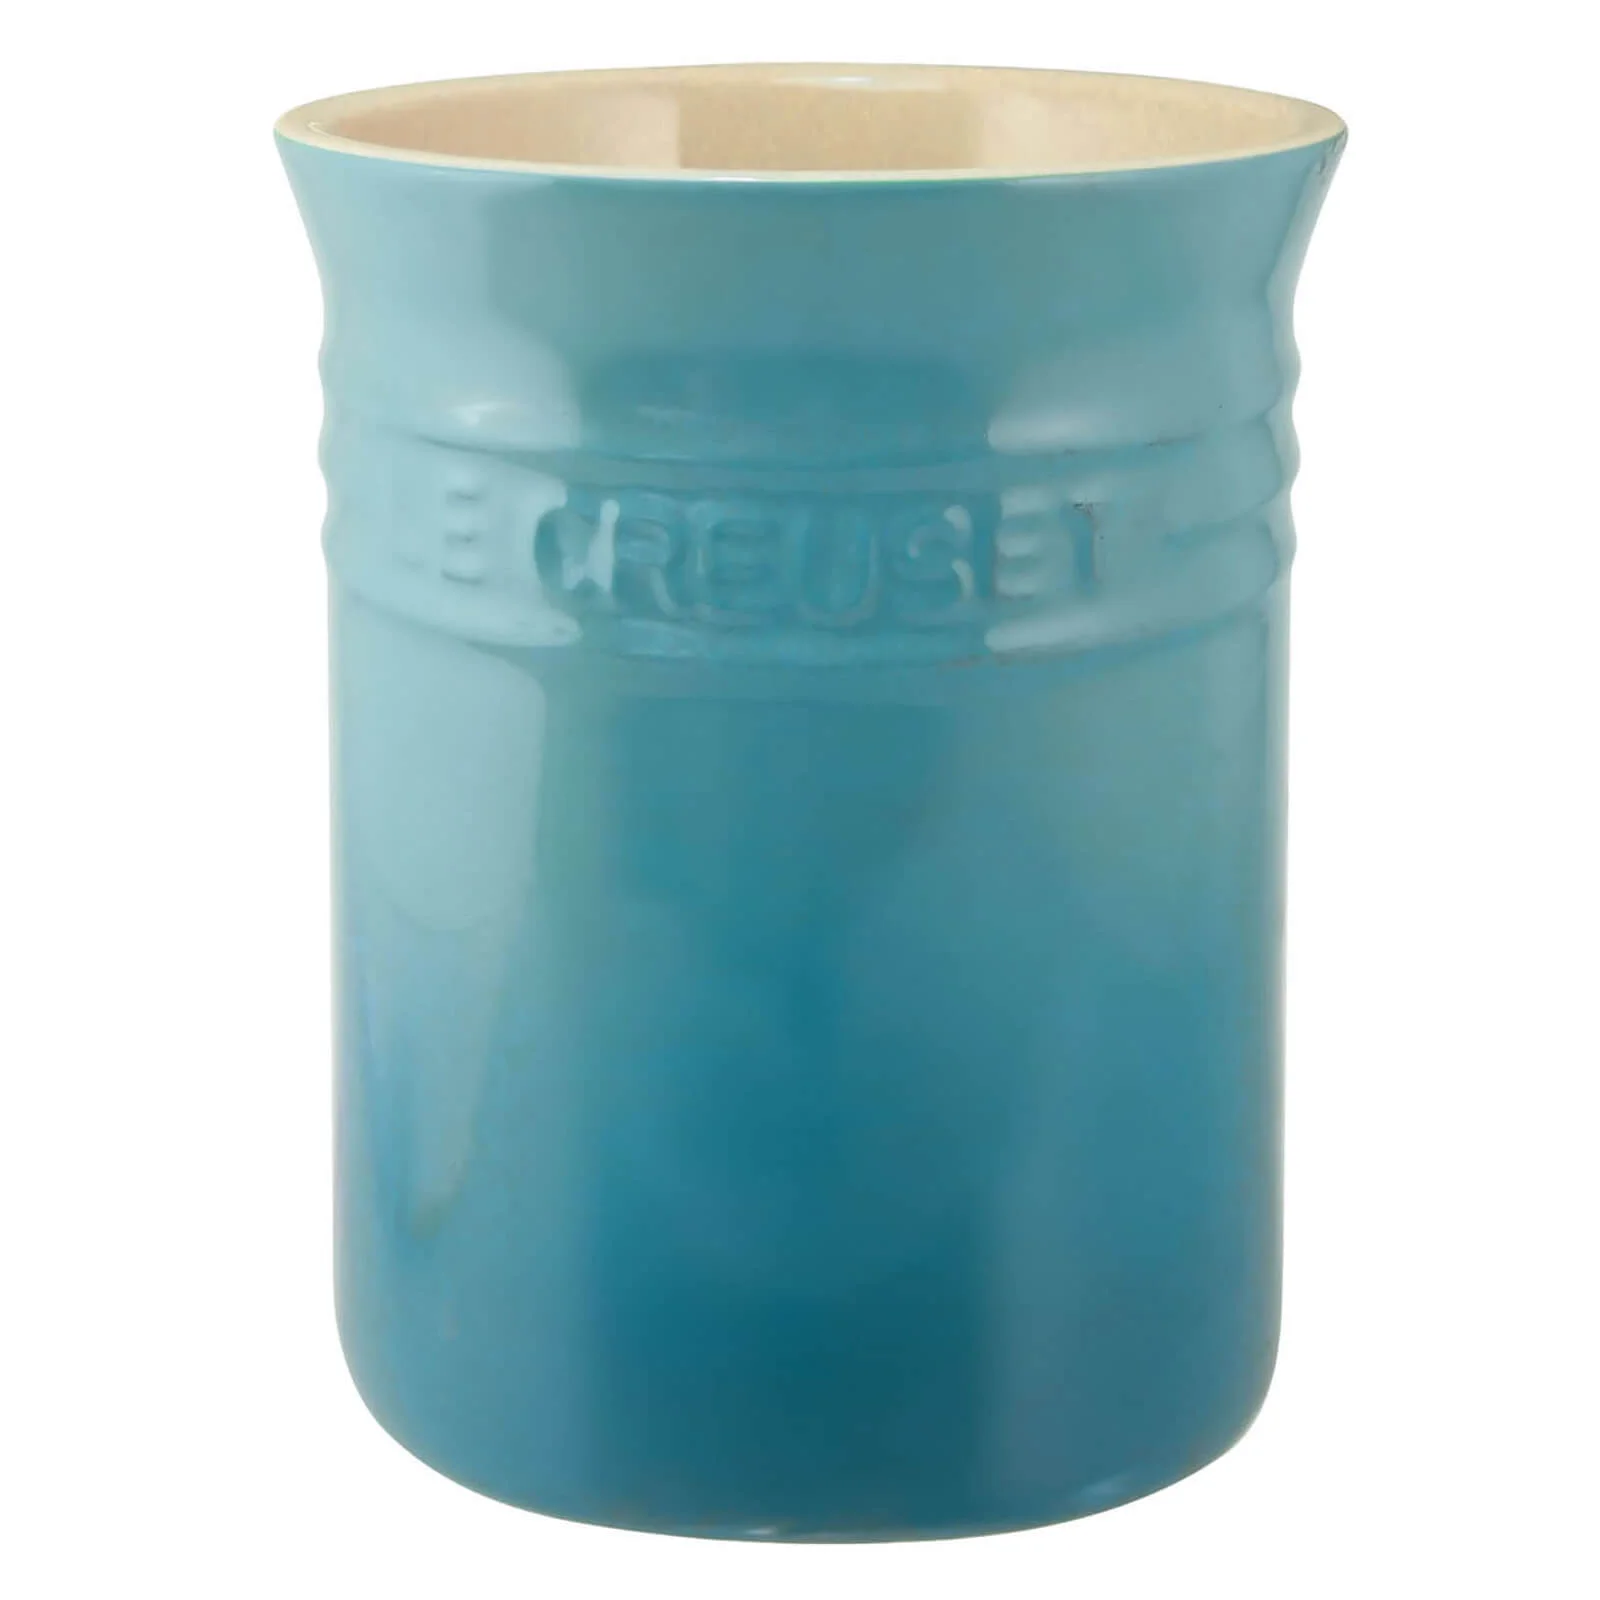 Le Creuset Stoneware Small Utensil Jar - Teal Image 1